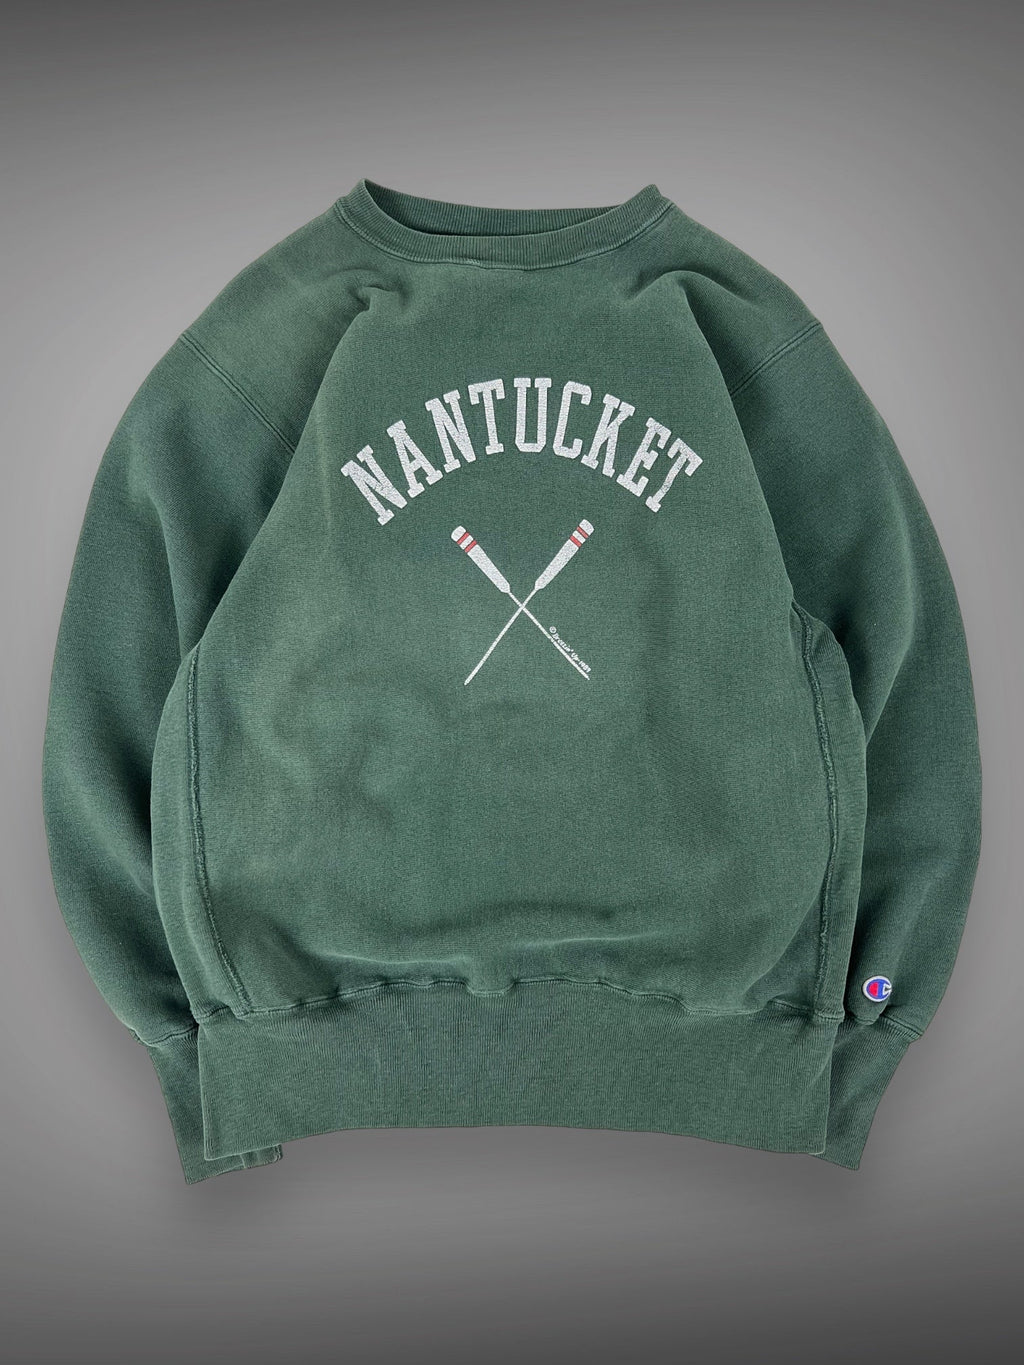 90s Champion Nantucket reverse weave crewneck sweatshirt L